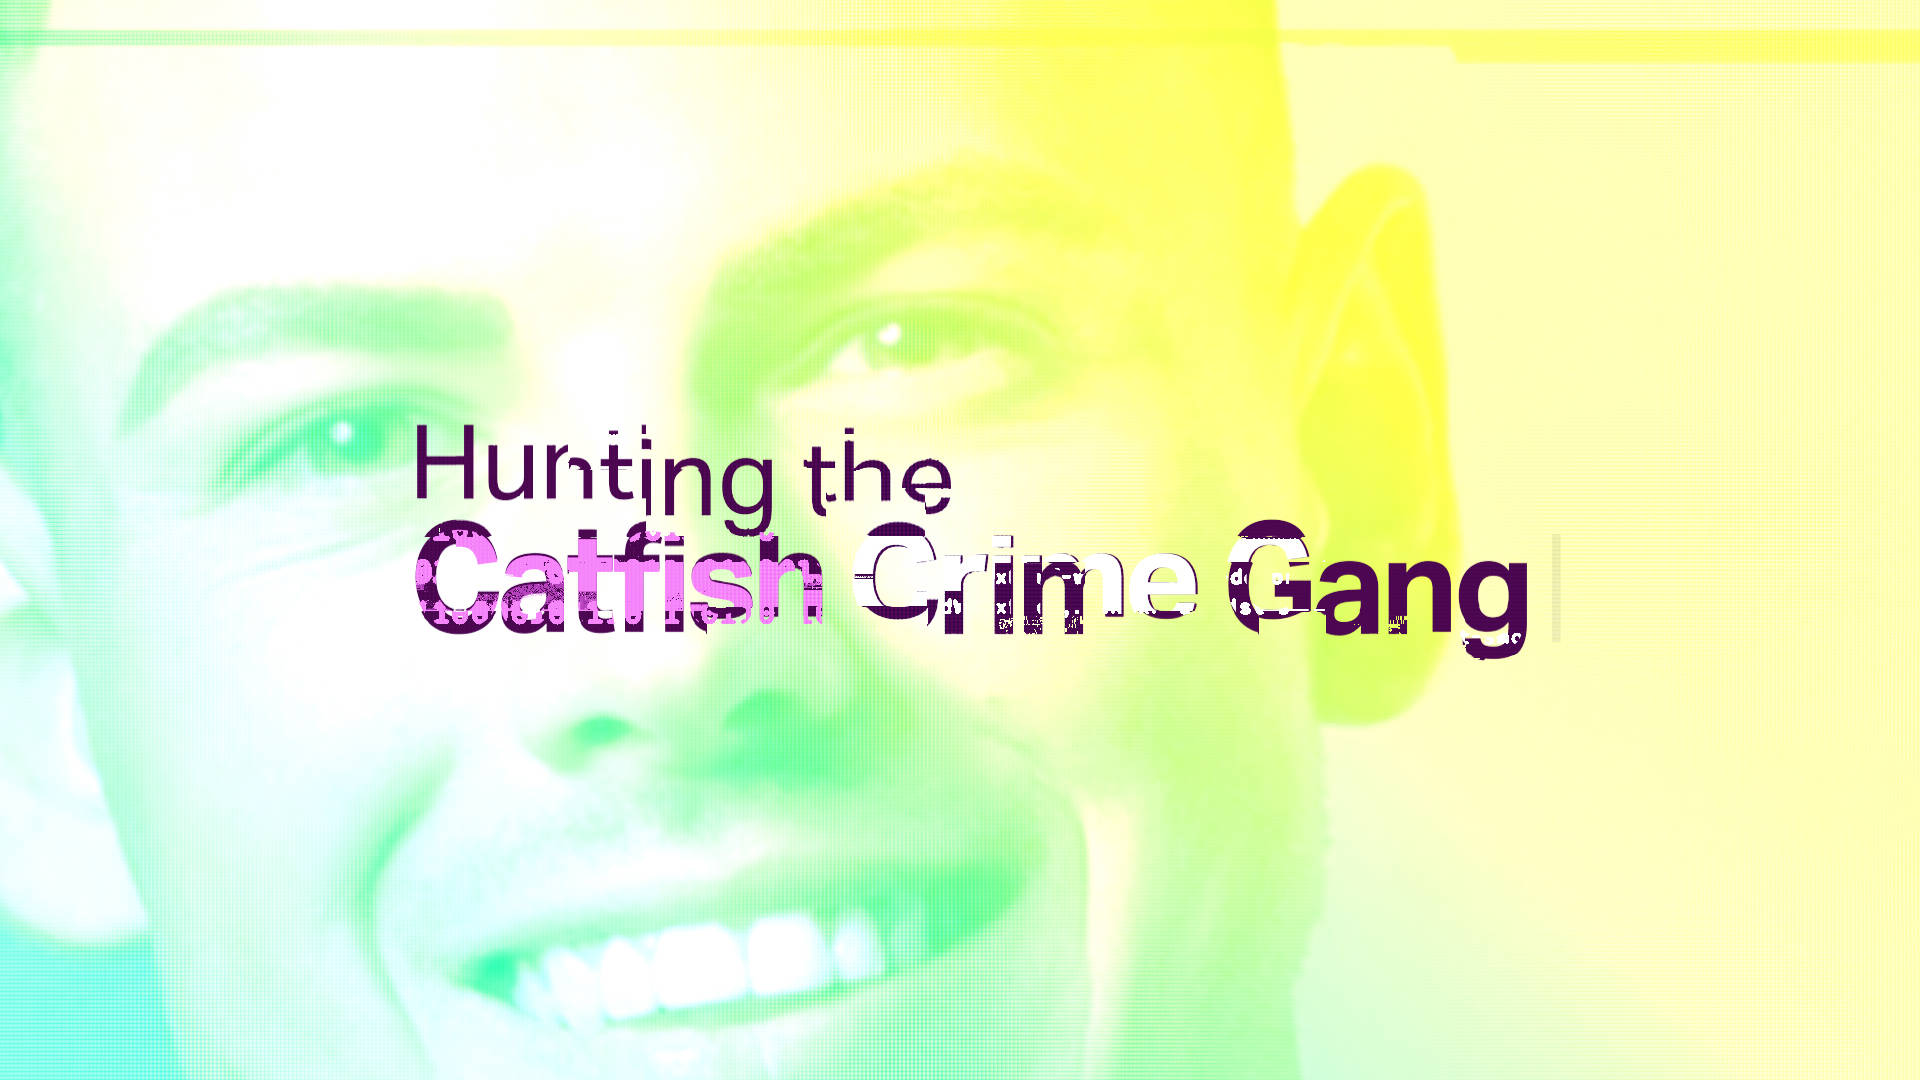 Hunting the Catfish Crime Gang